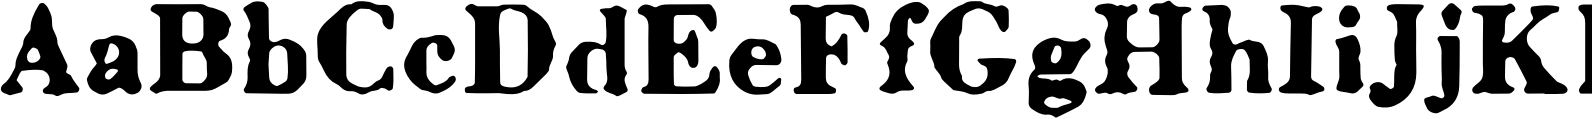 CC Letterhack Serif Bold